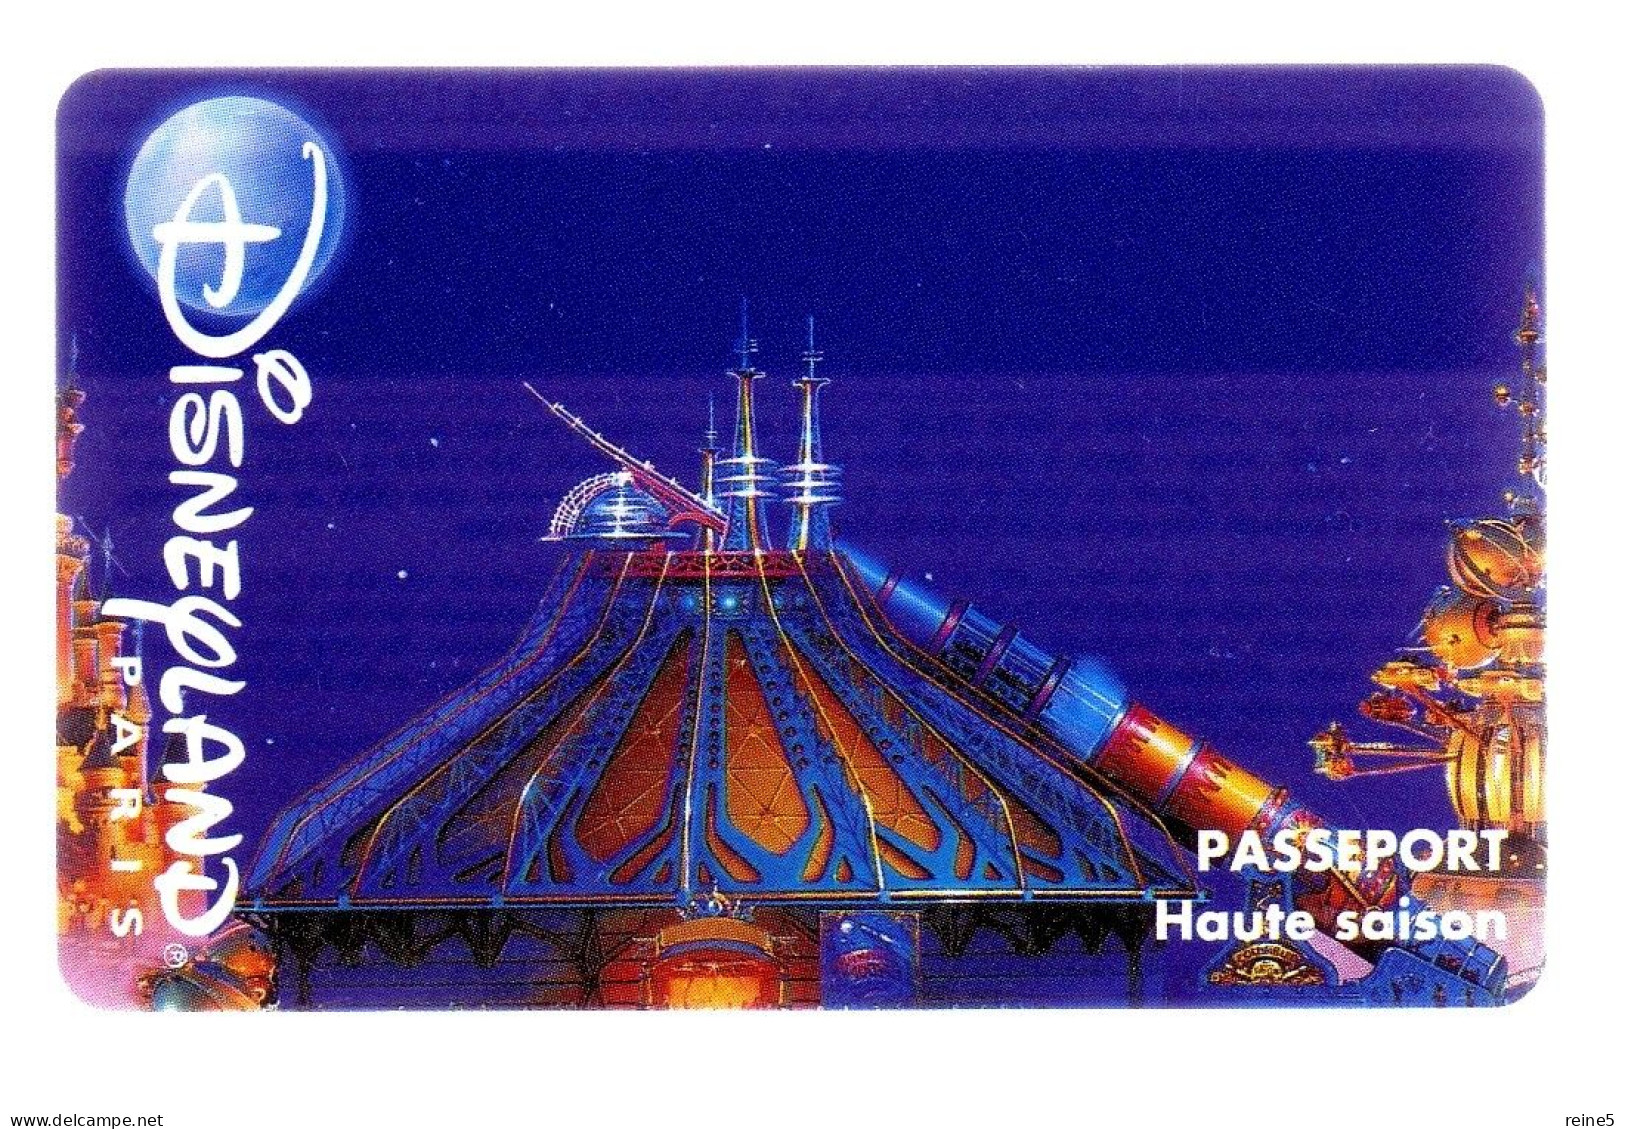 PASSEPORT HAUTE SAISON DISNEYLAND PARIS -TRES BON ETAT -REF-PASS DISNEY-15 - Disney Passports